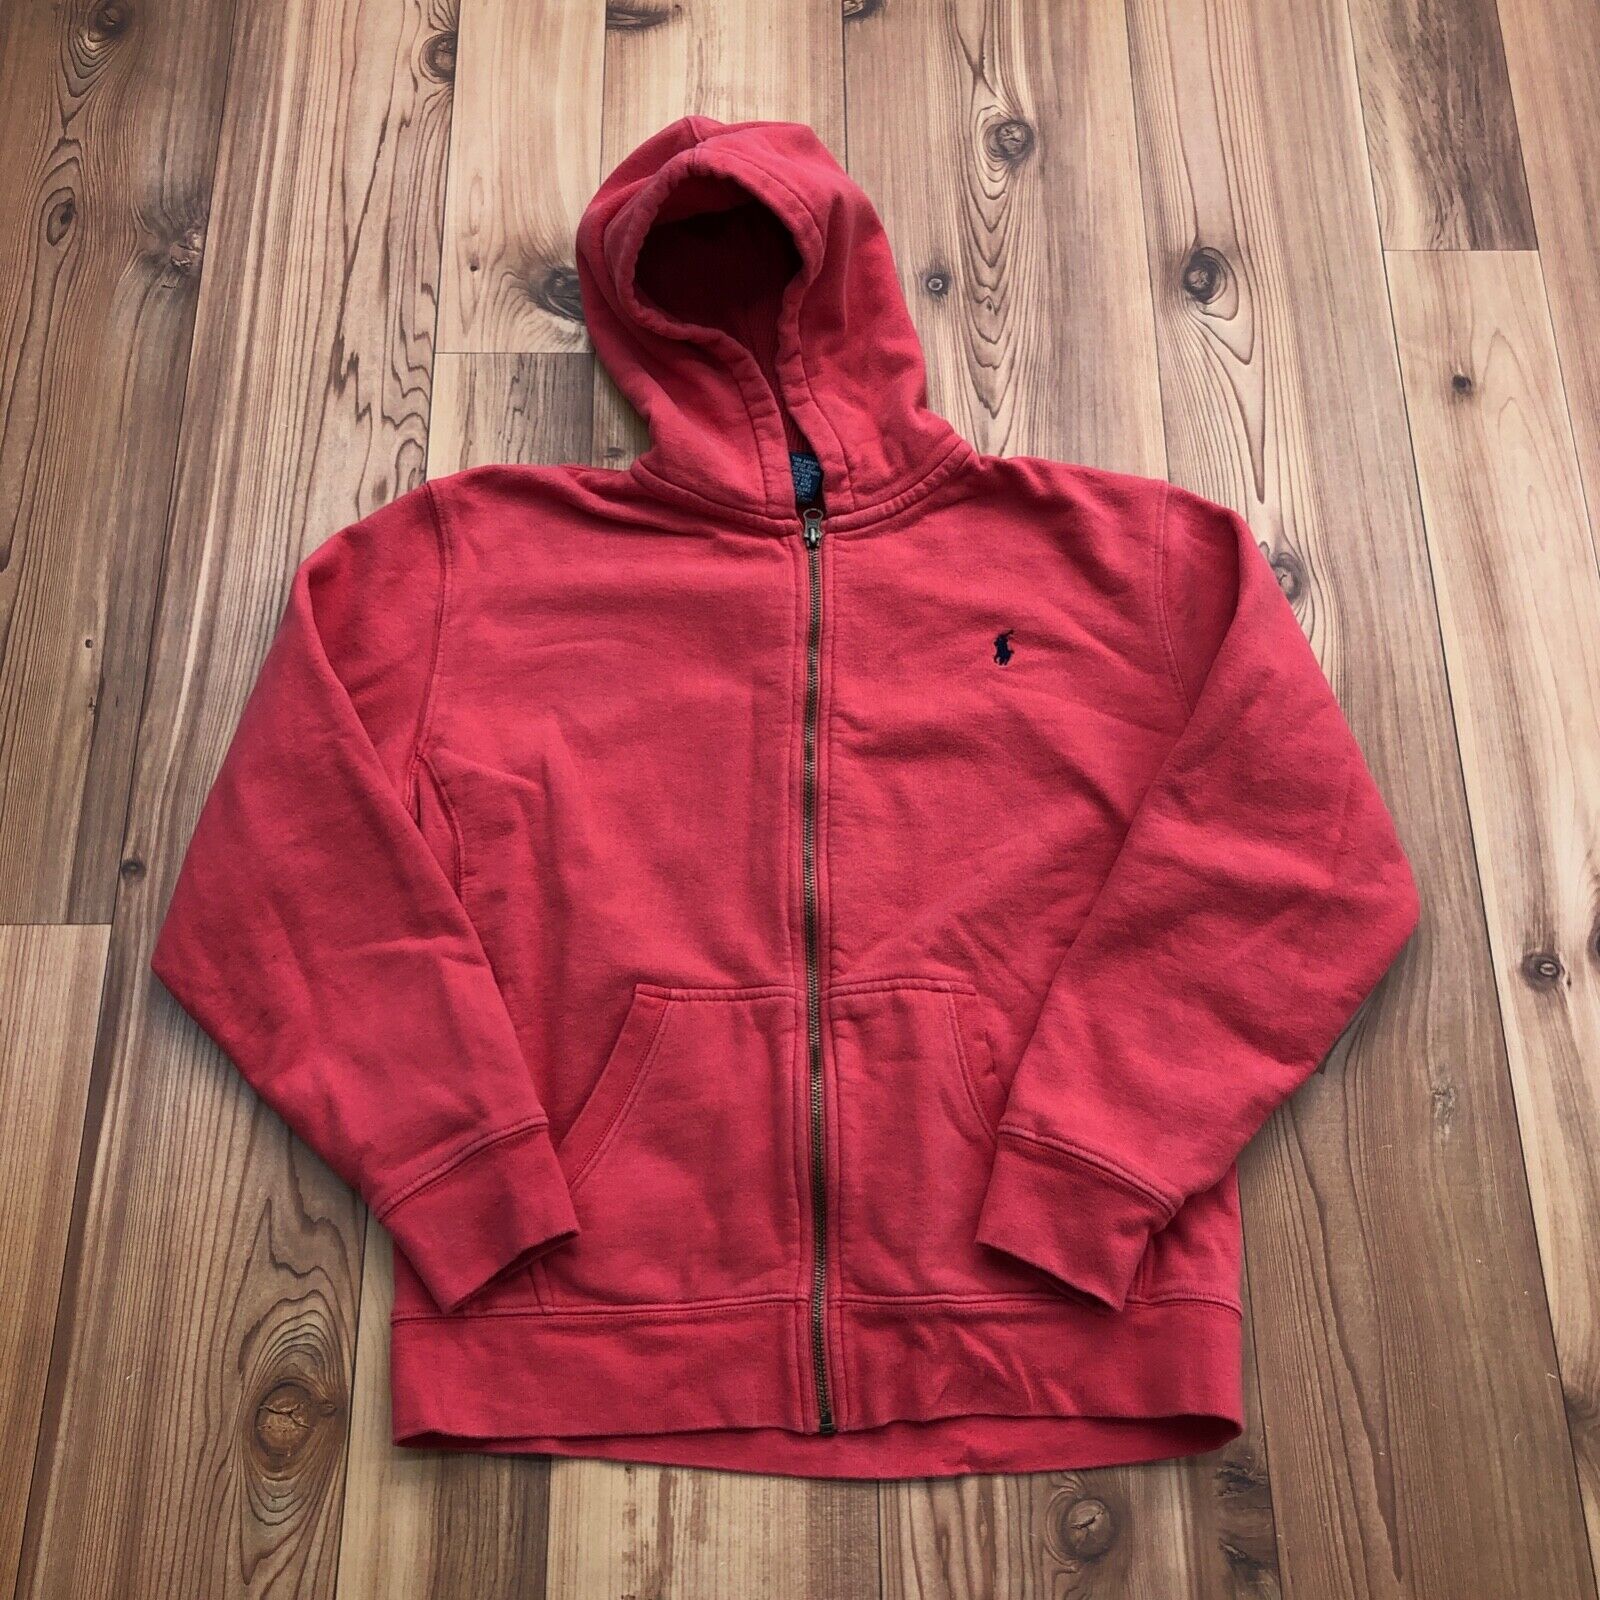 Polo Ralph Lauren Coral Full Zip Thermal Hood Sweatshirt Jacket Girl's Size L